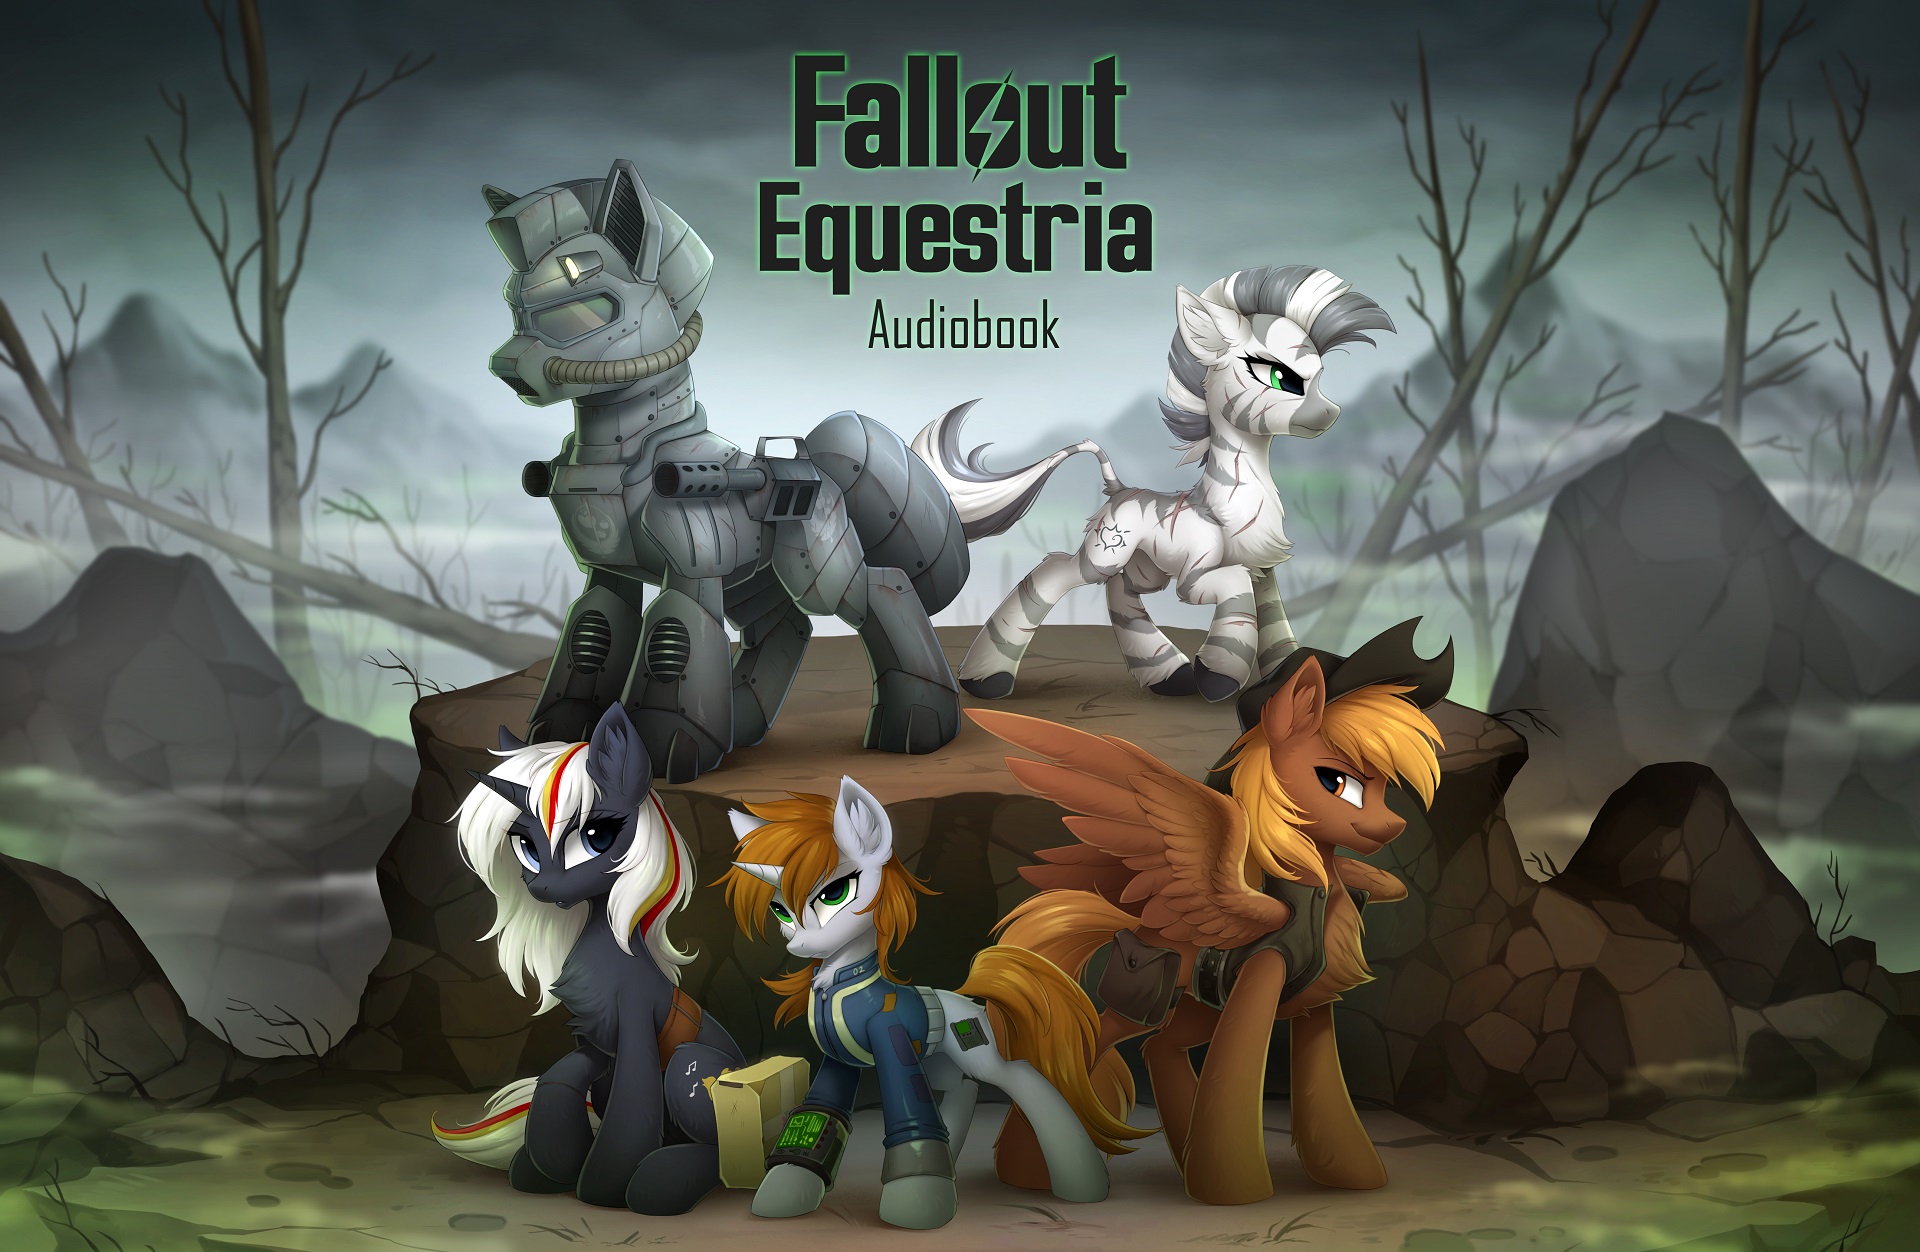 Fall Of Equestria